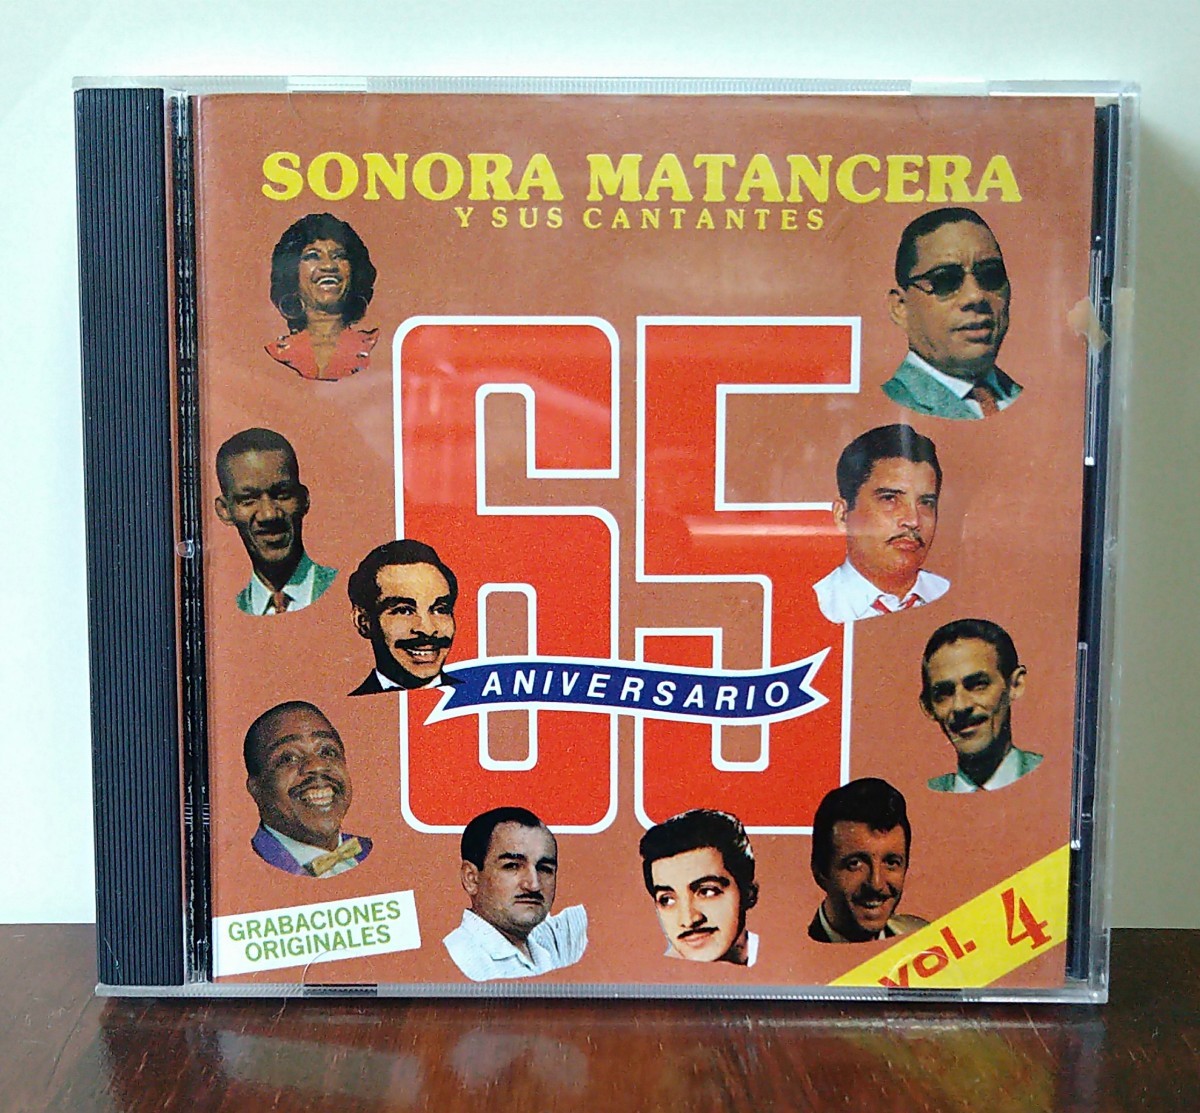  【CD】ソノーラ・マタンセーラ◆SONORA MATANCERA /65 Aniversario Vol.4◆キューバ_画像1